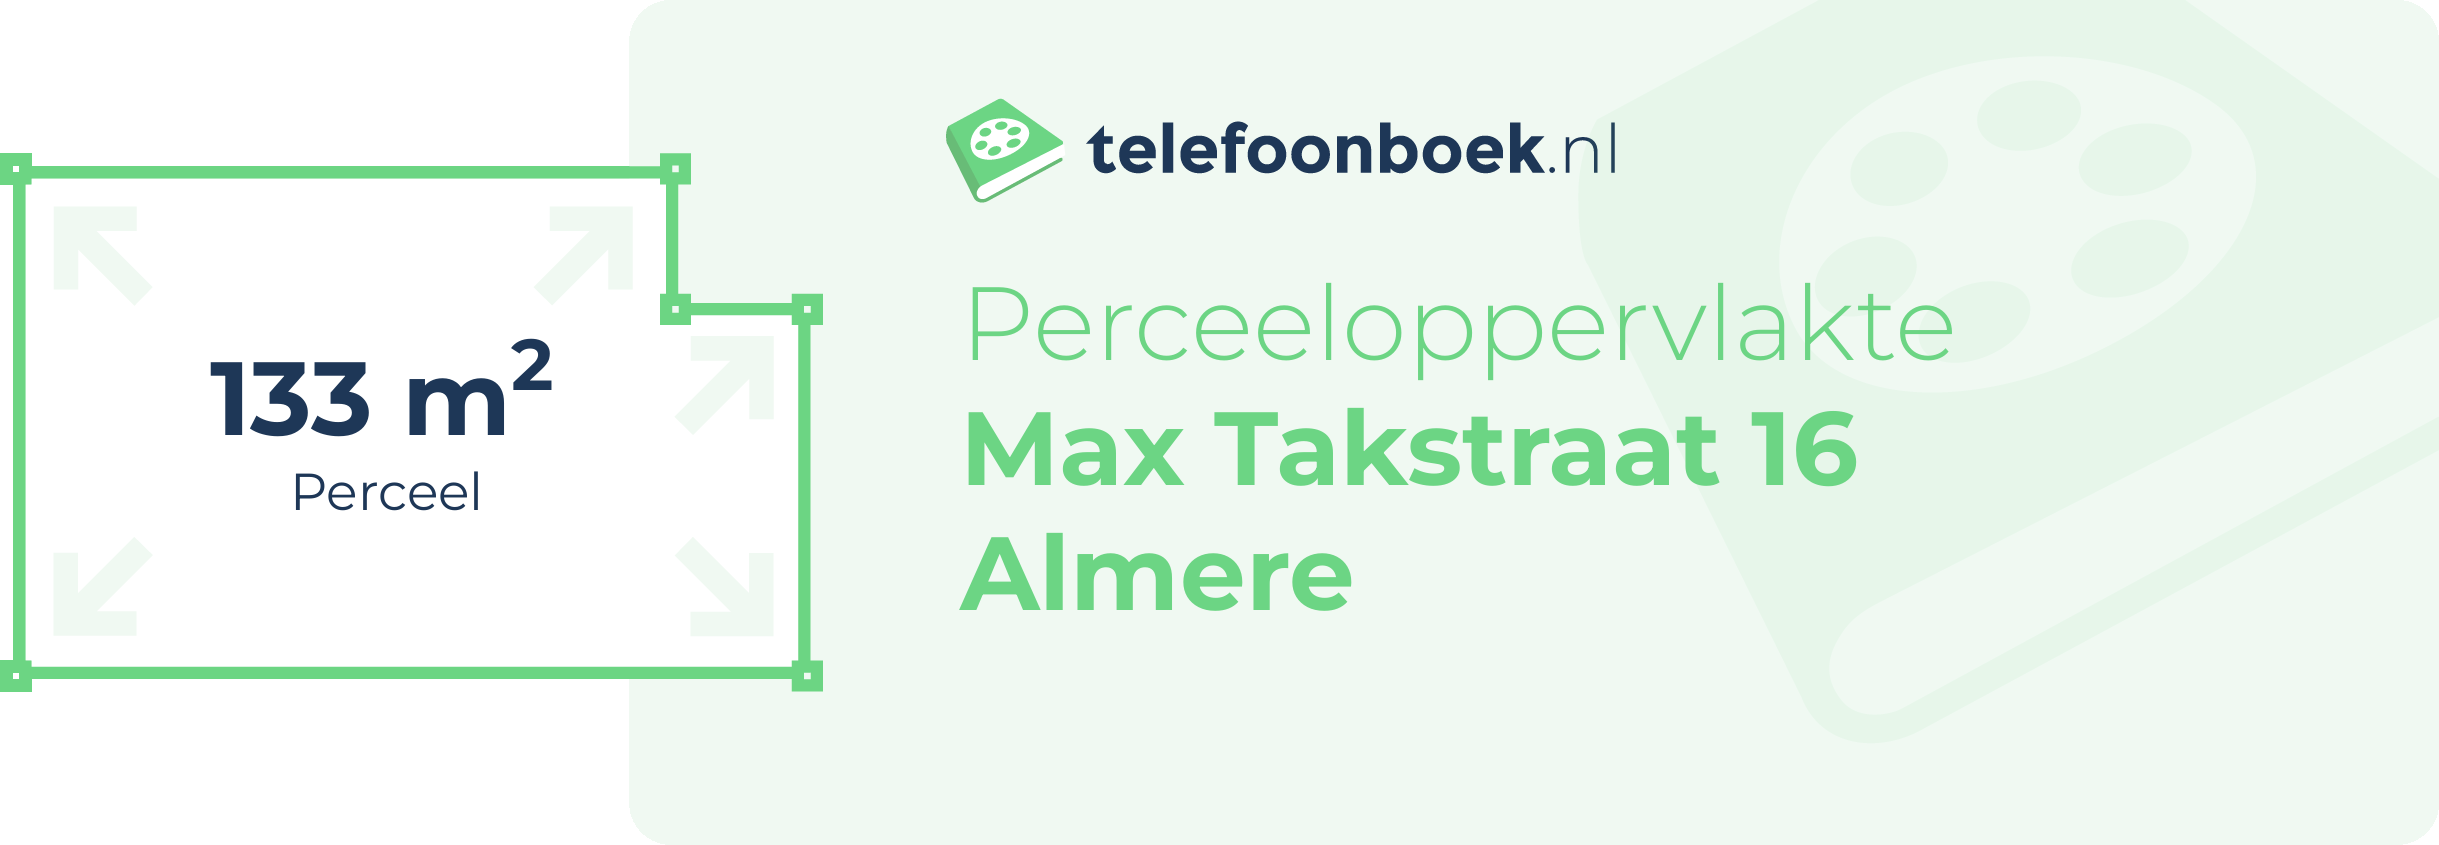 Perceeloppervlakte Max Takstraat 16 Almere